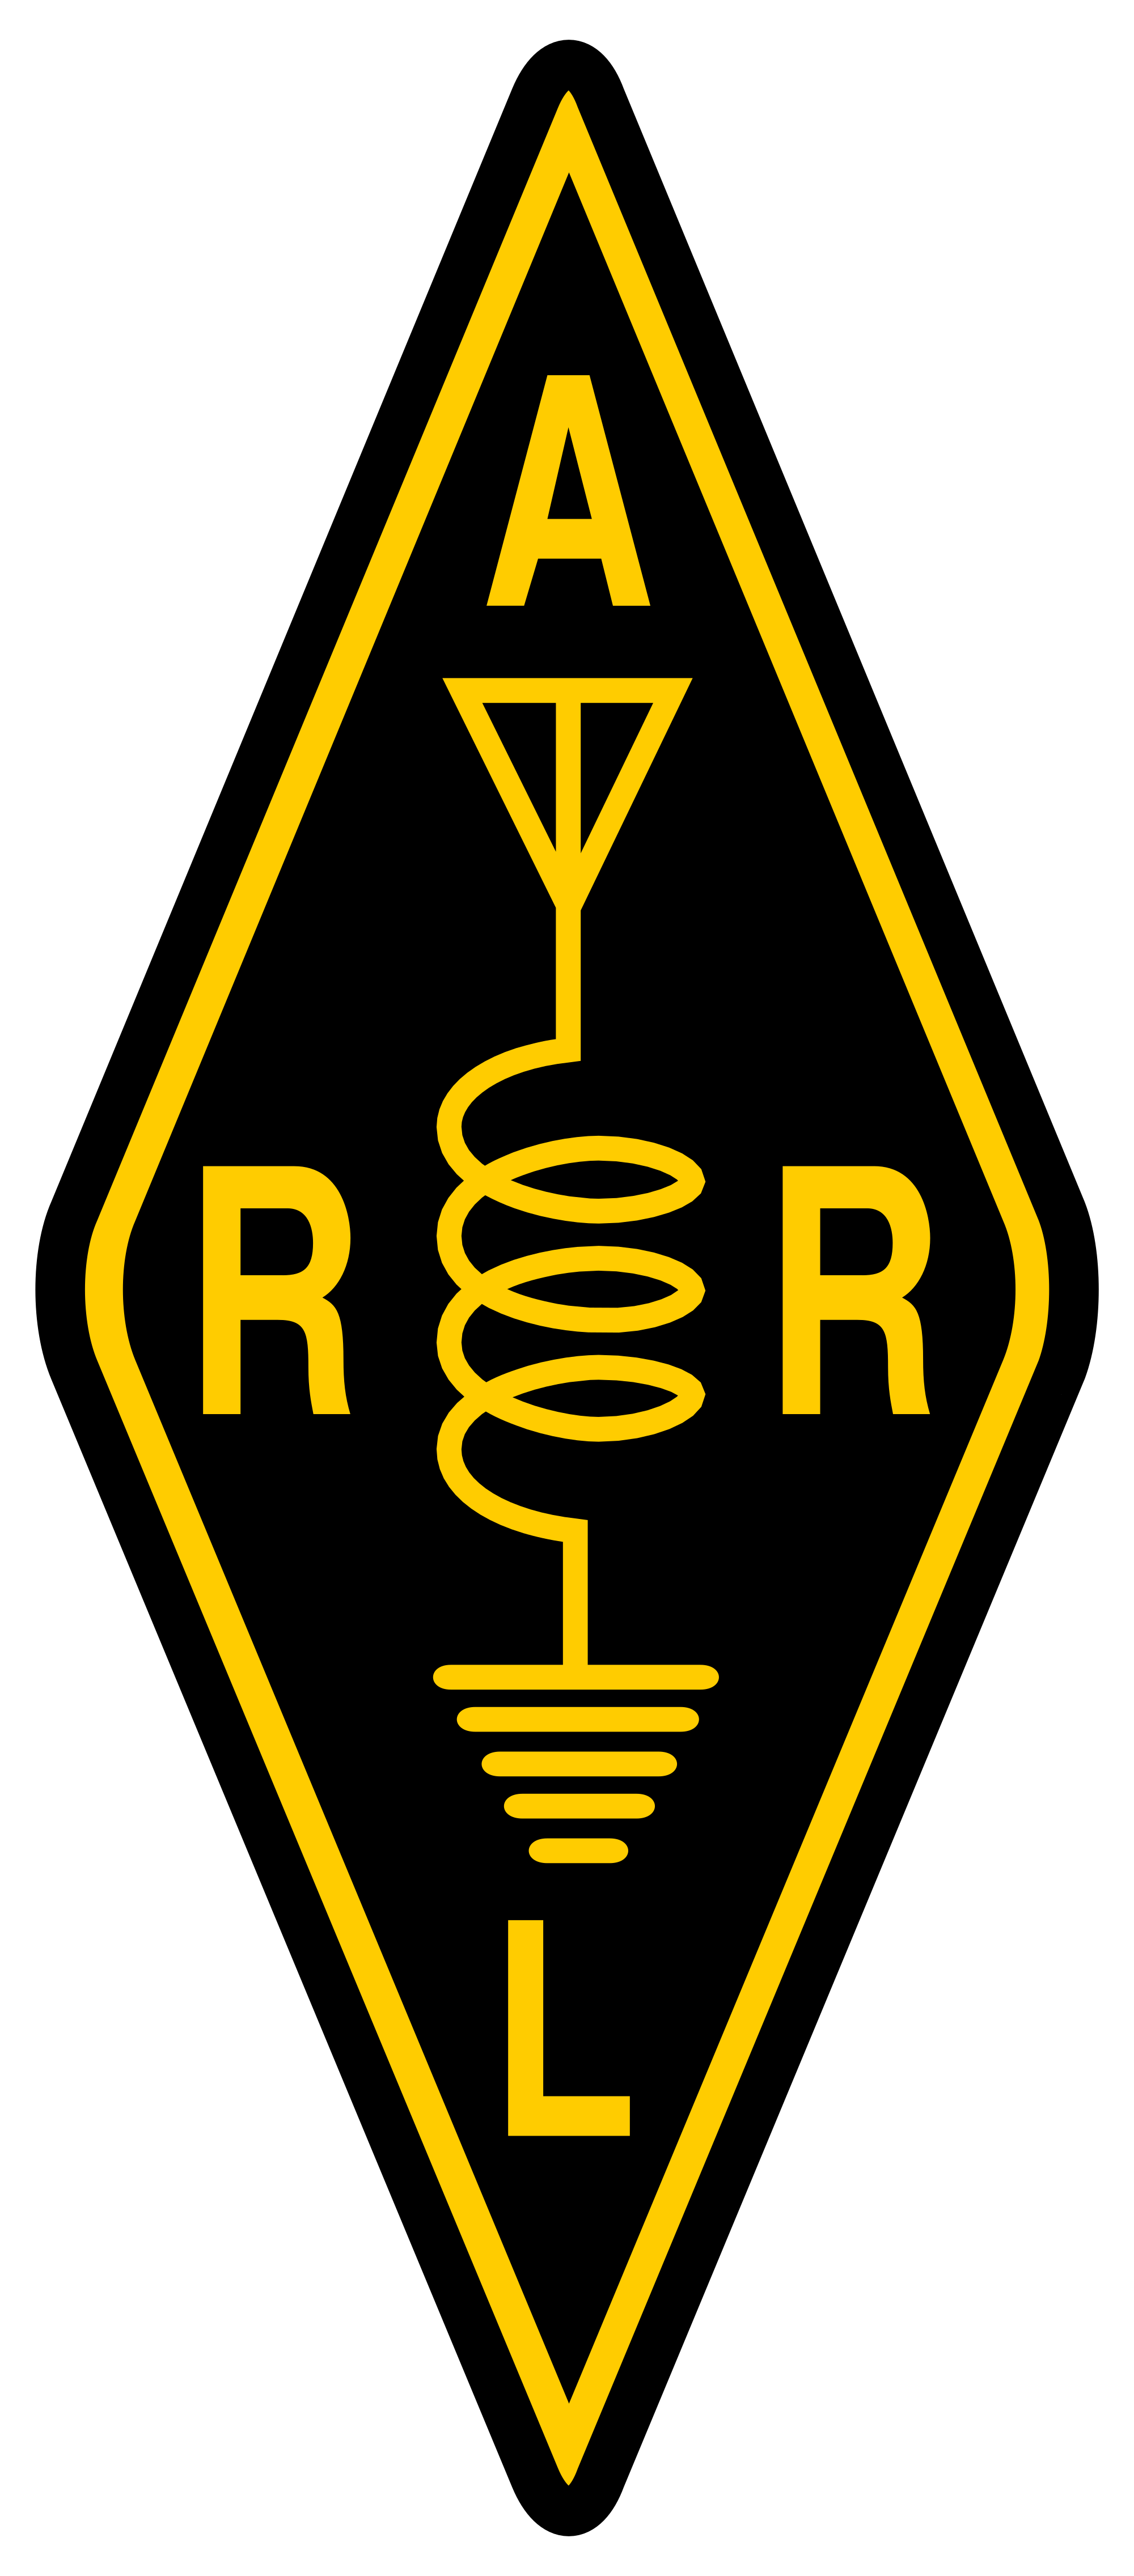 ARRL Logo - American Radio Relay League